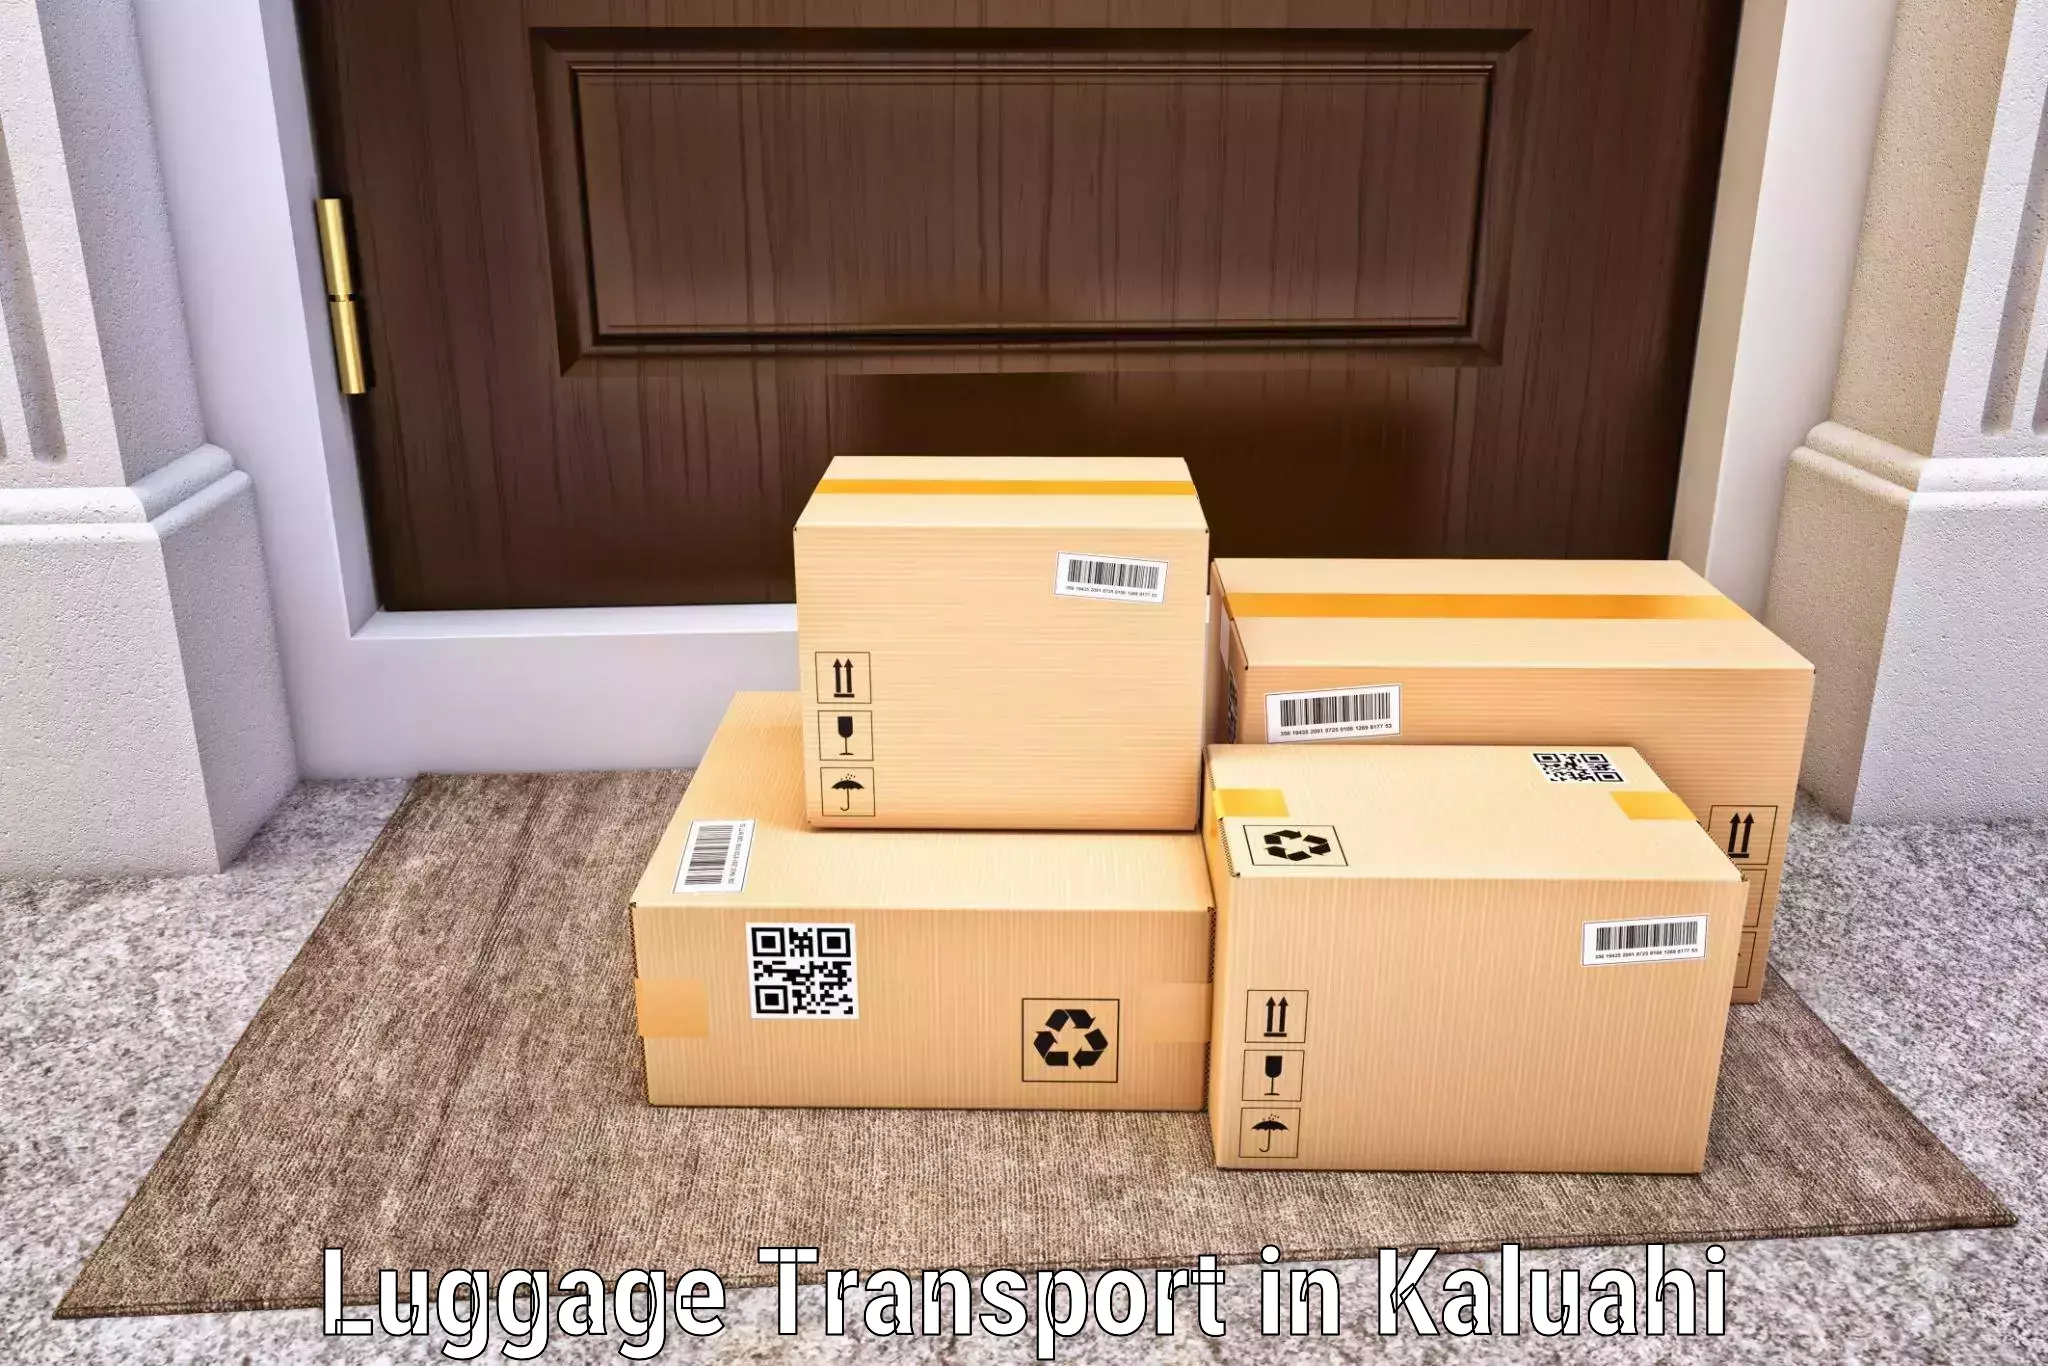 Student luggage transport in Kaluahi